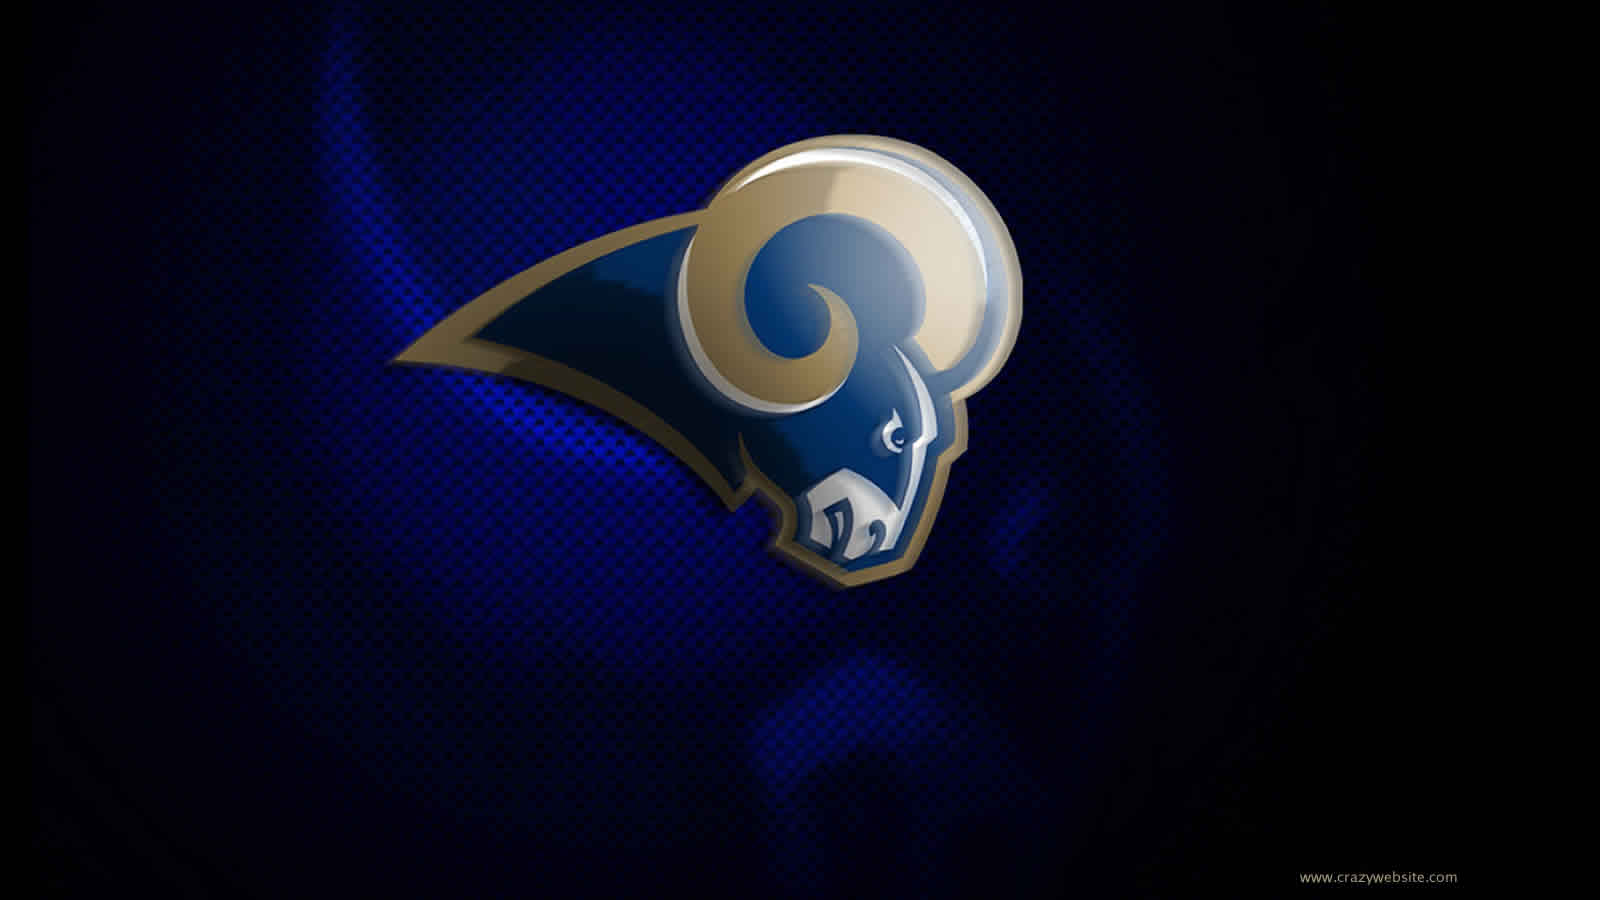 St. Louis Rams wallpaper iPhone  Nfl football logos, Nfl teams